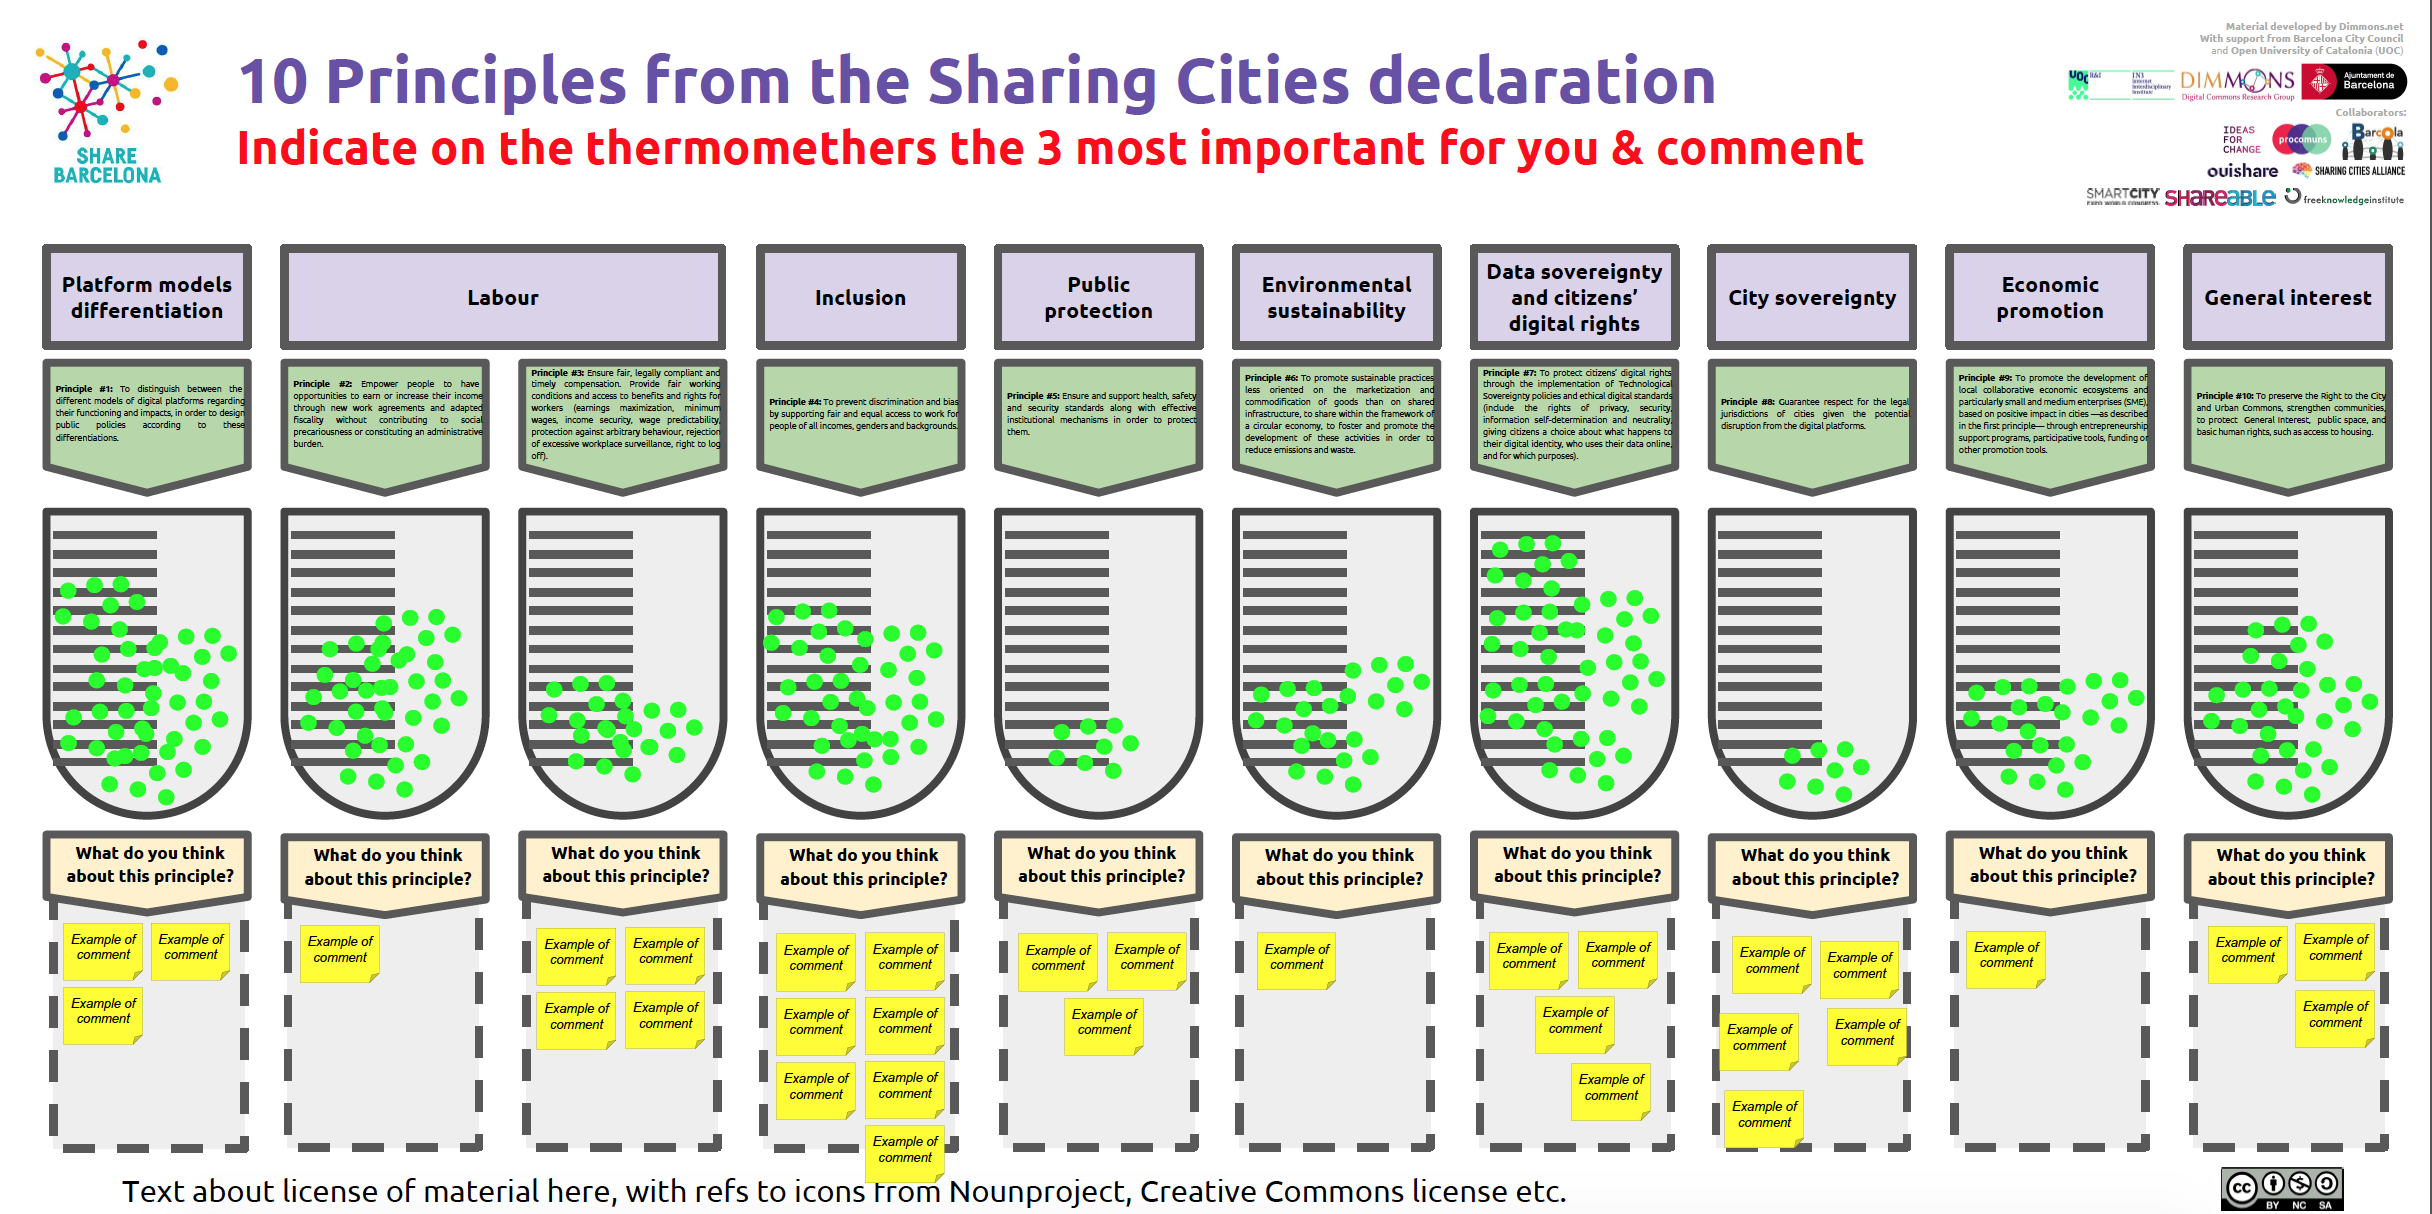 Co-creation Sharing Cities Summit